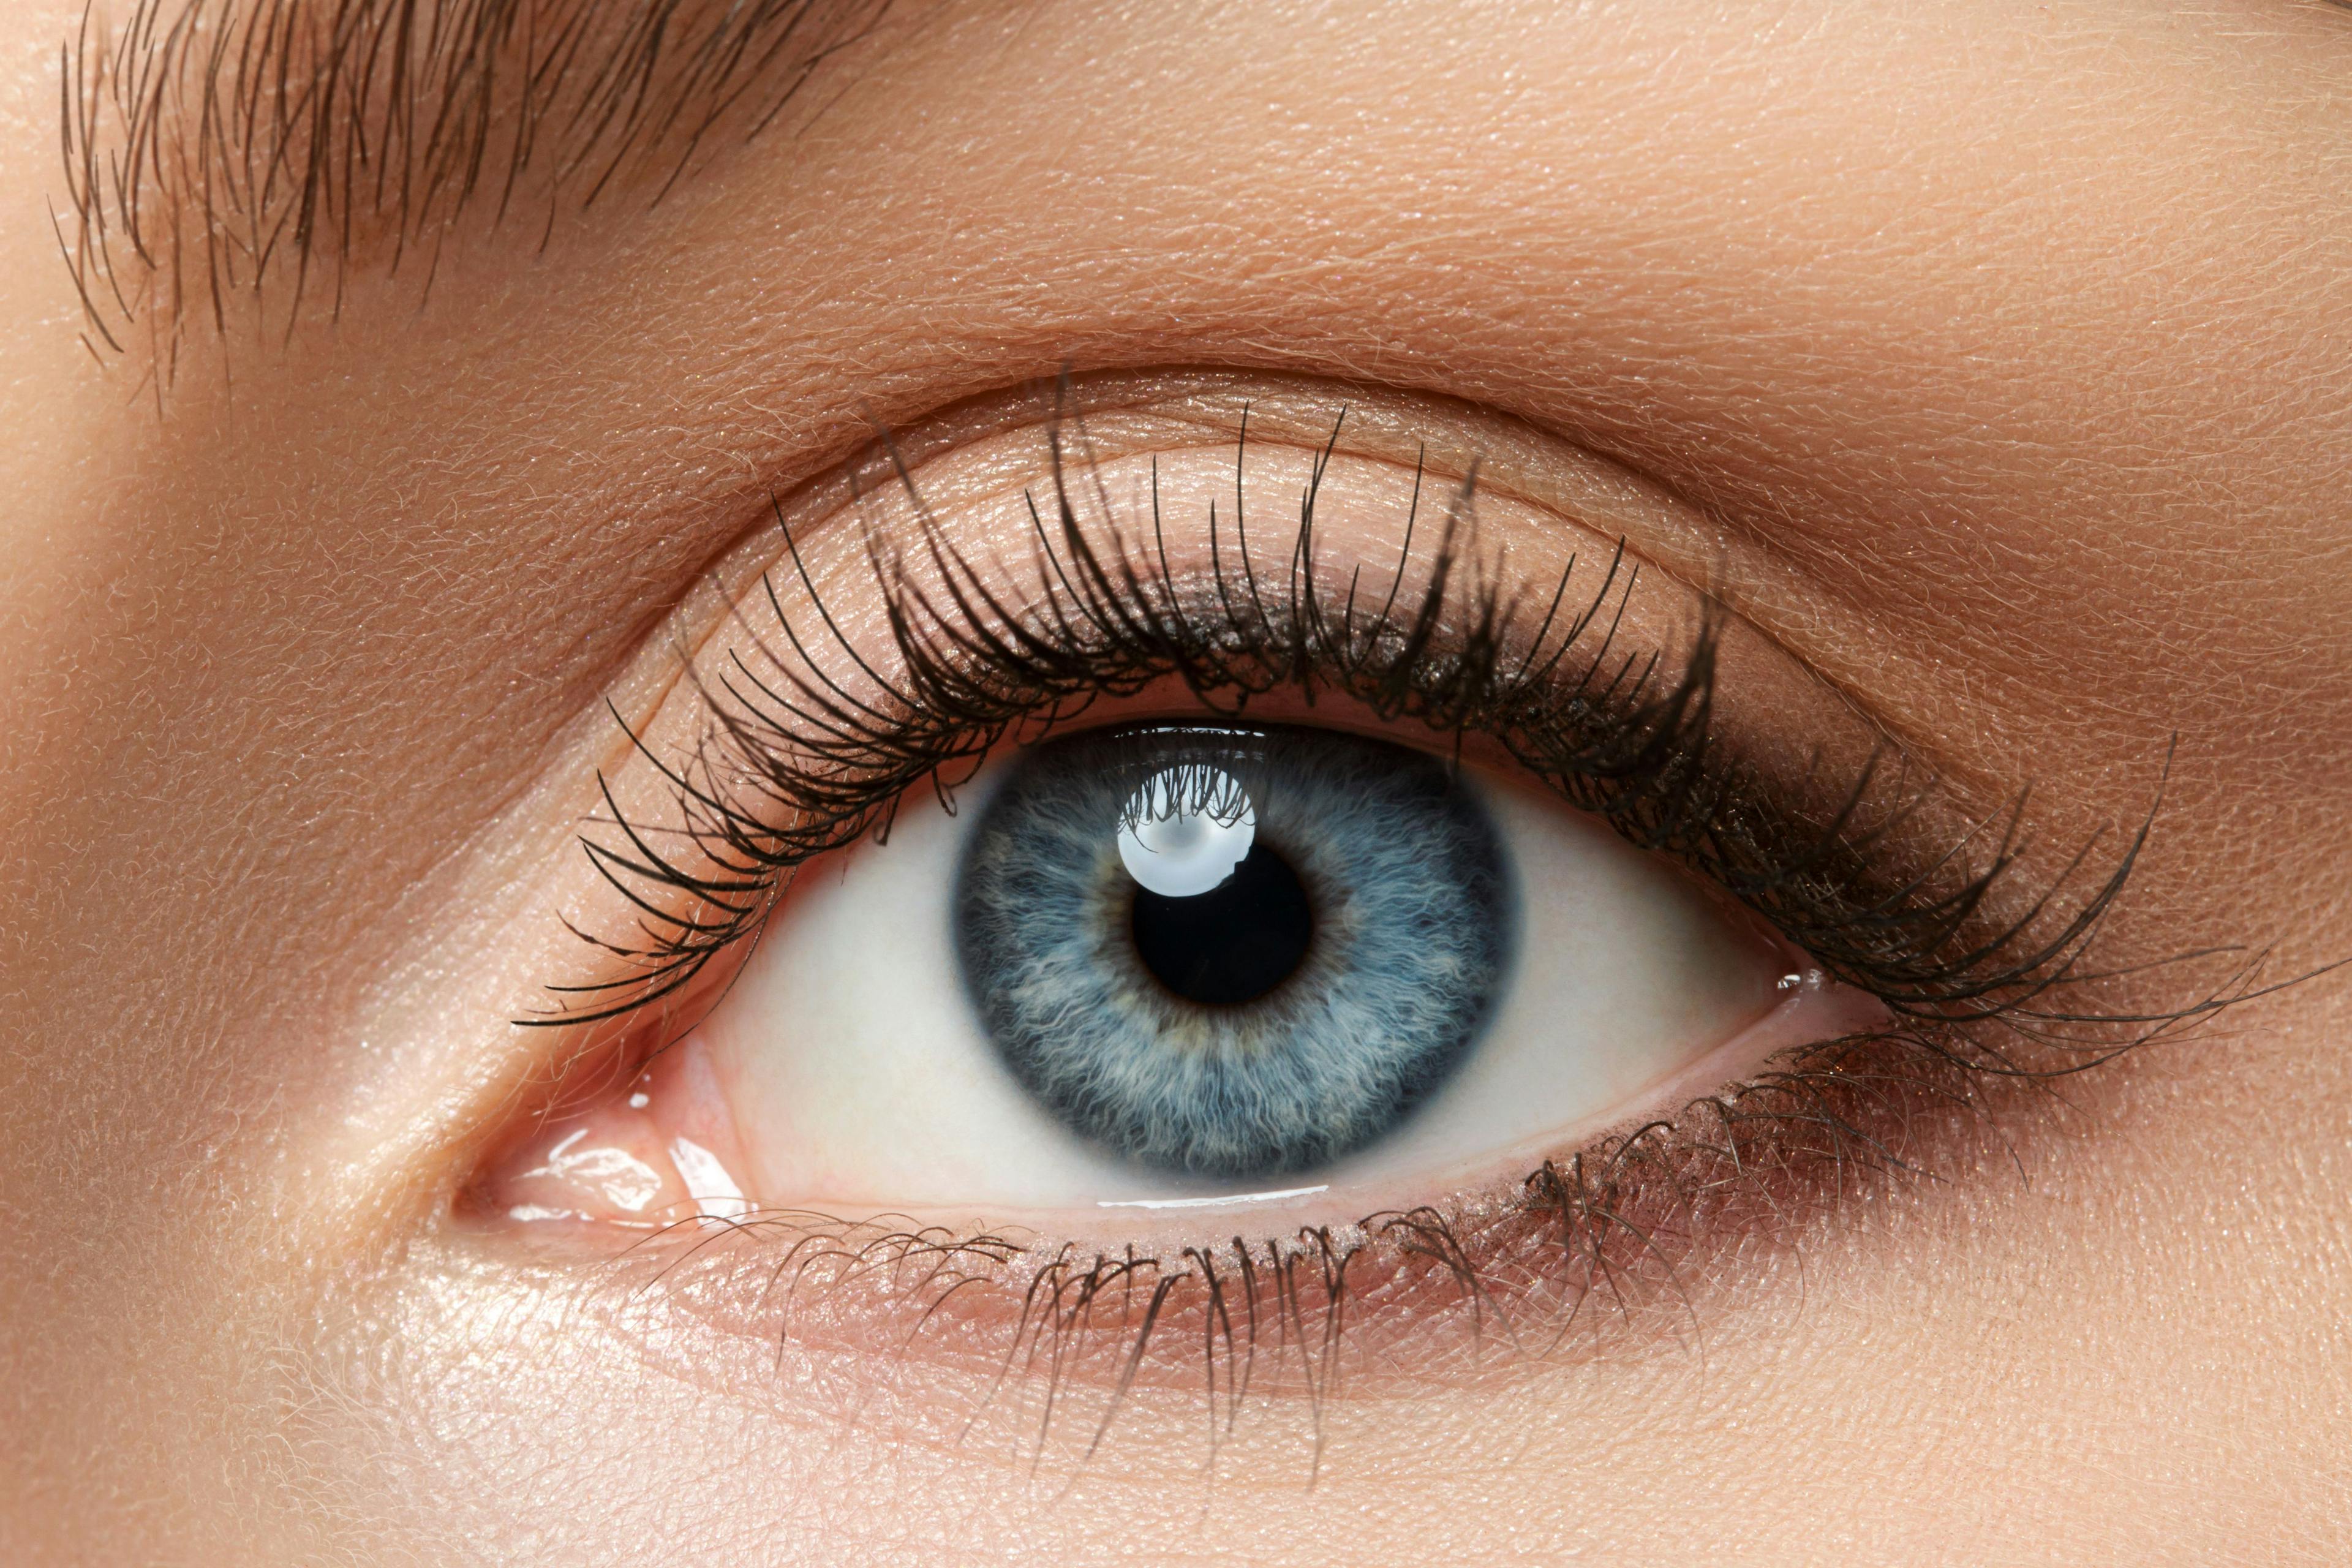 Close-up of blue eye | Image credit: Liudmila Dutko - stock.adobe.com